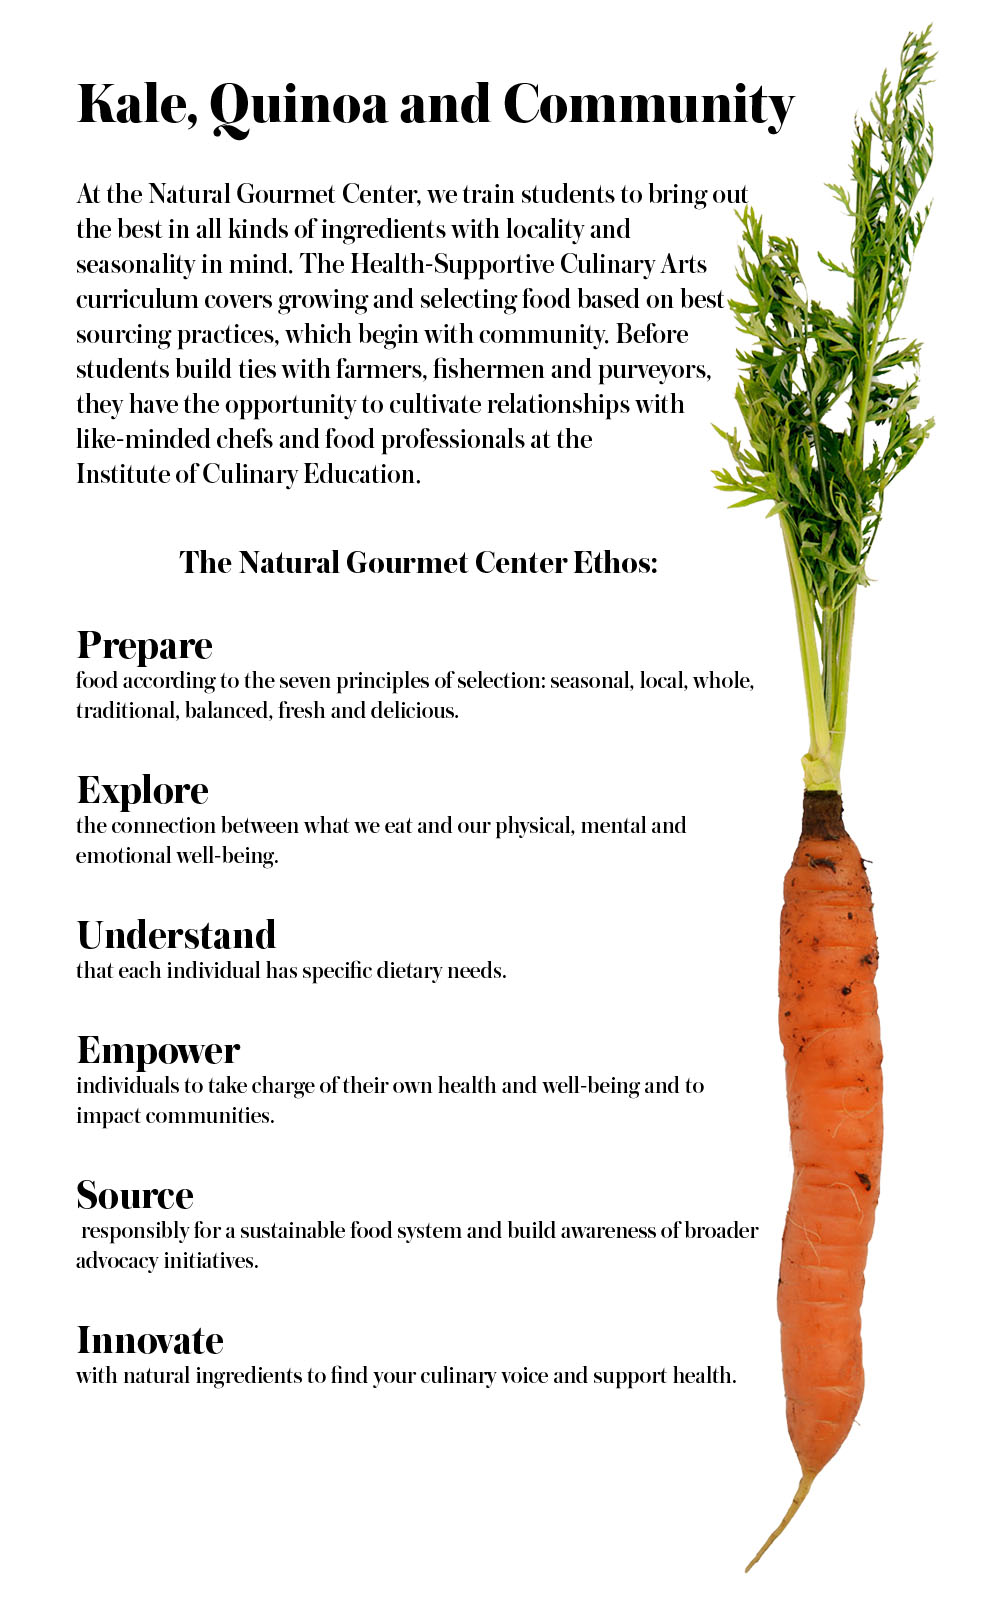 Kale Quinoa and Community ethos